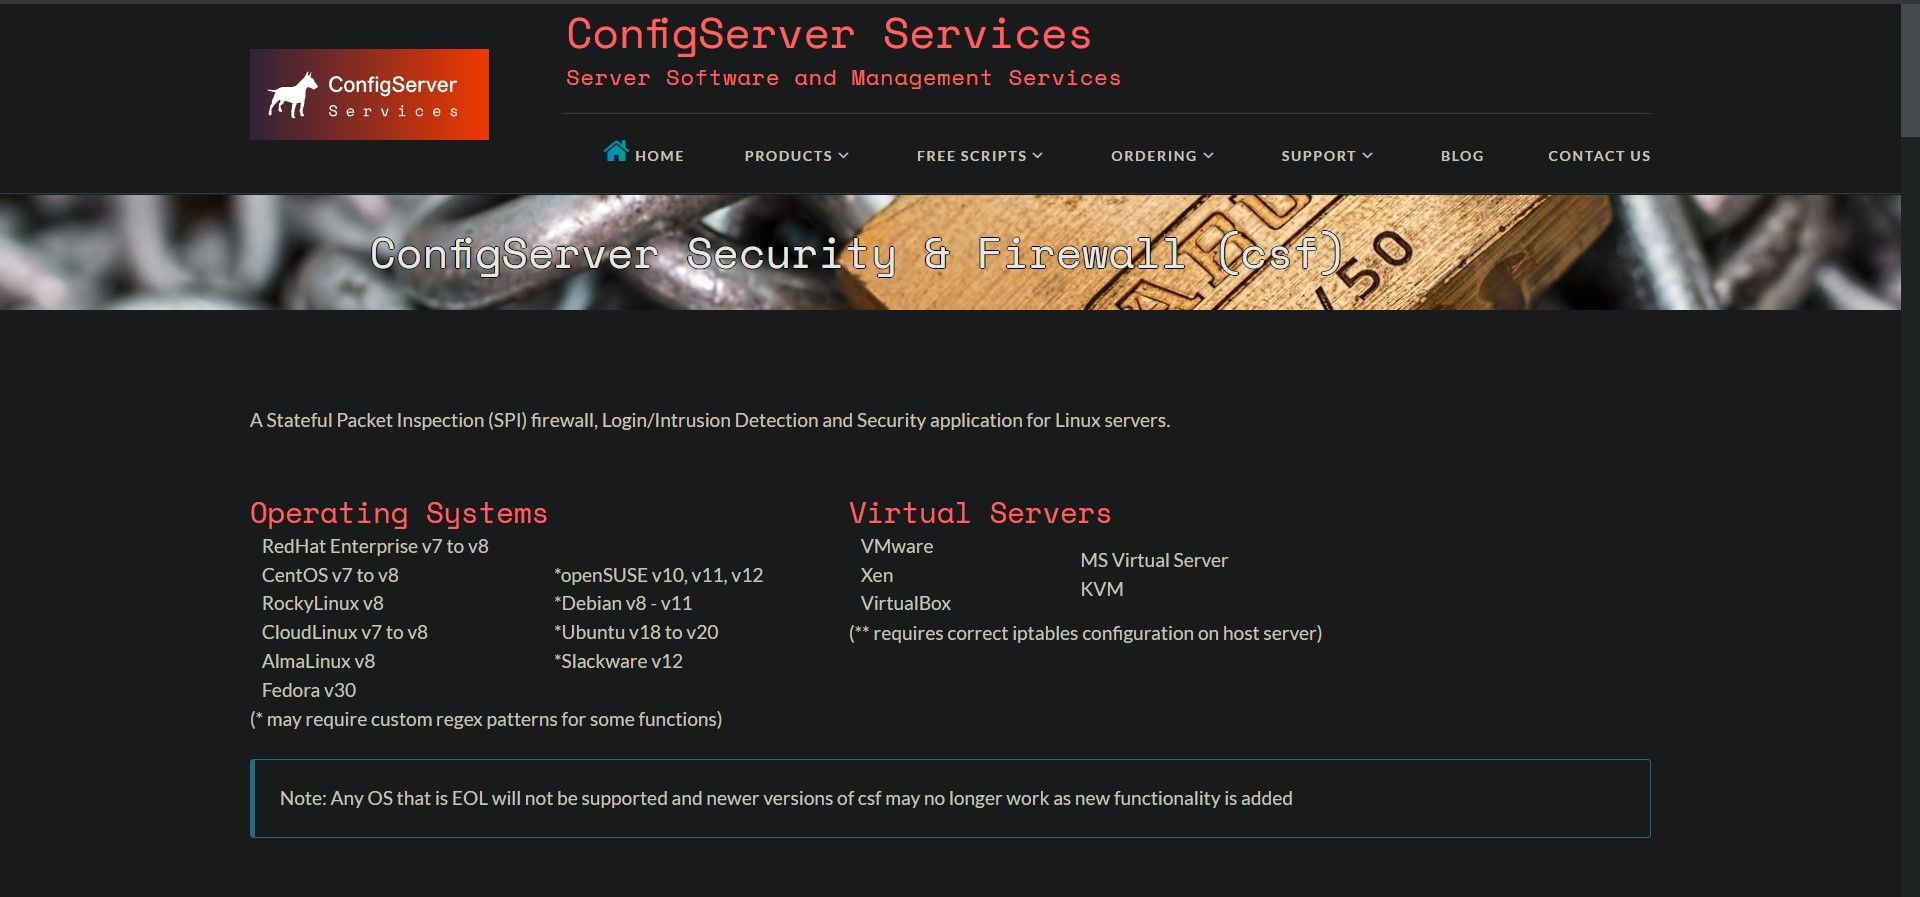 Configserver Firewall Website Home Page